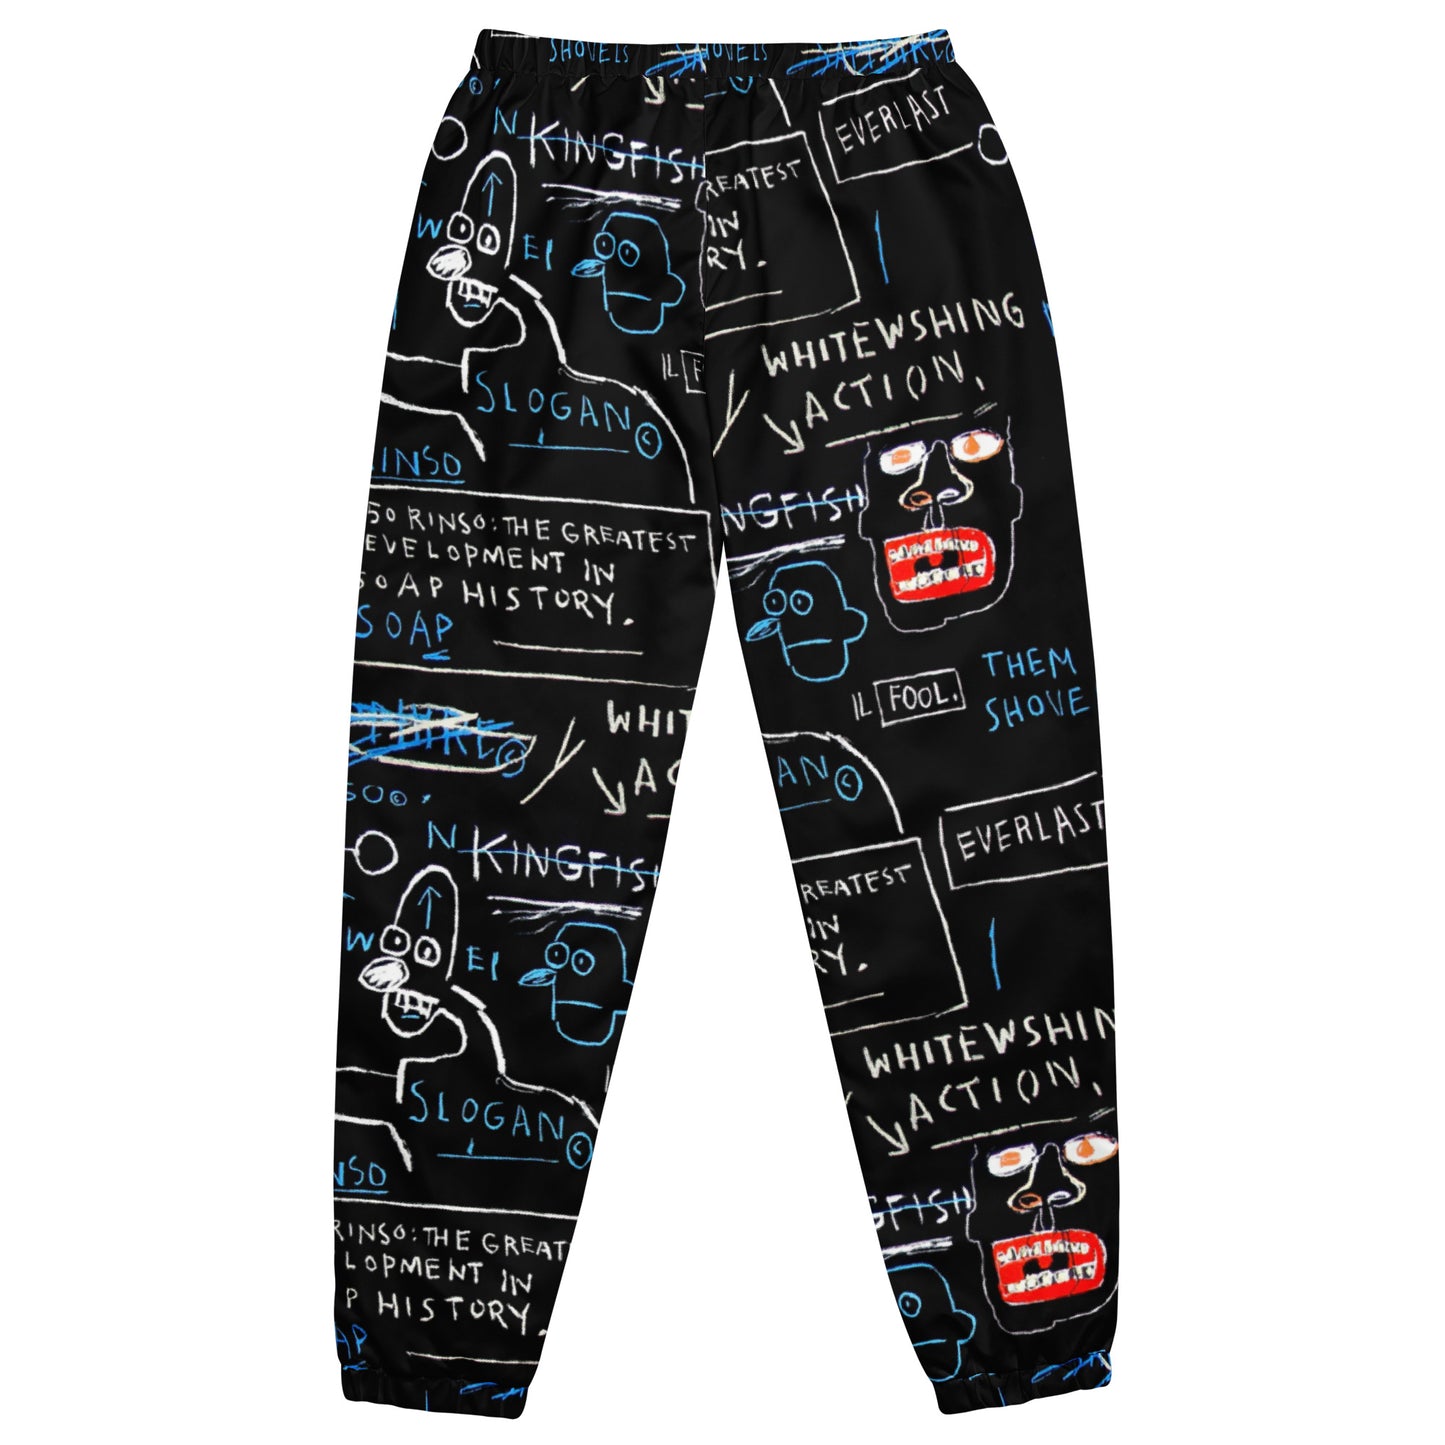 Jean-Michel Basquiat "Rinso" Artwork Printed Premium Track Pants Scattered